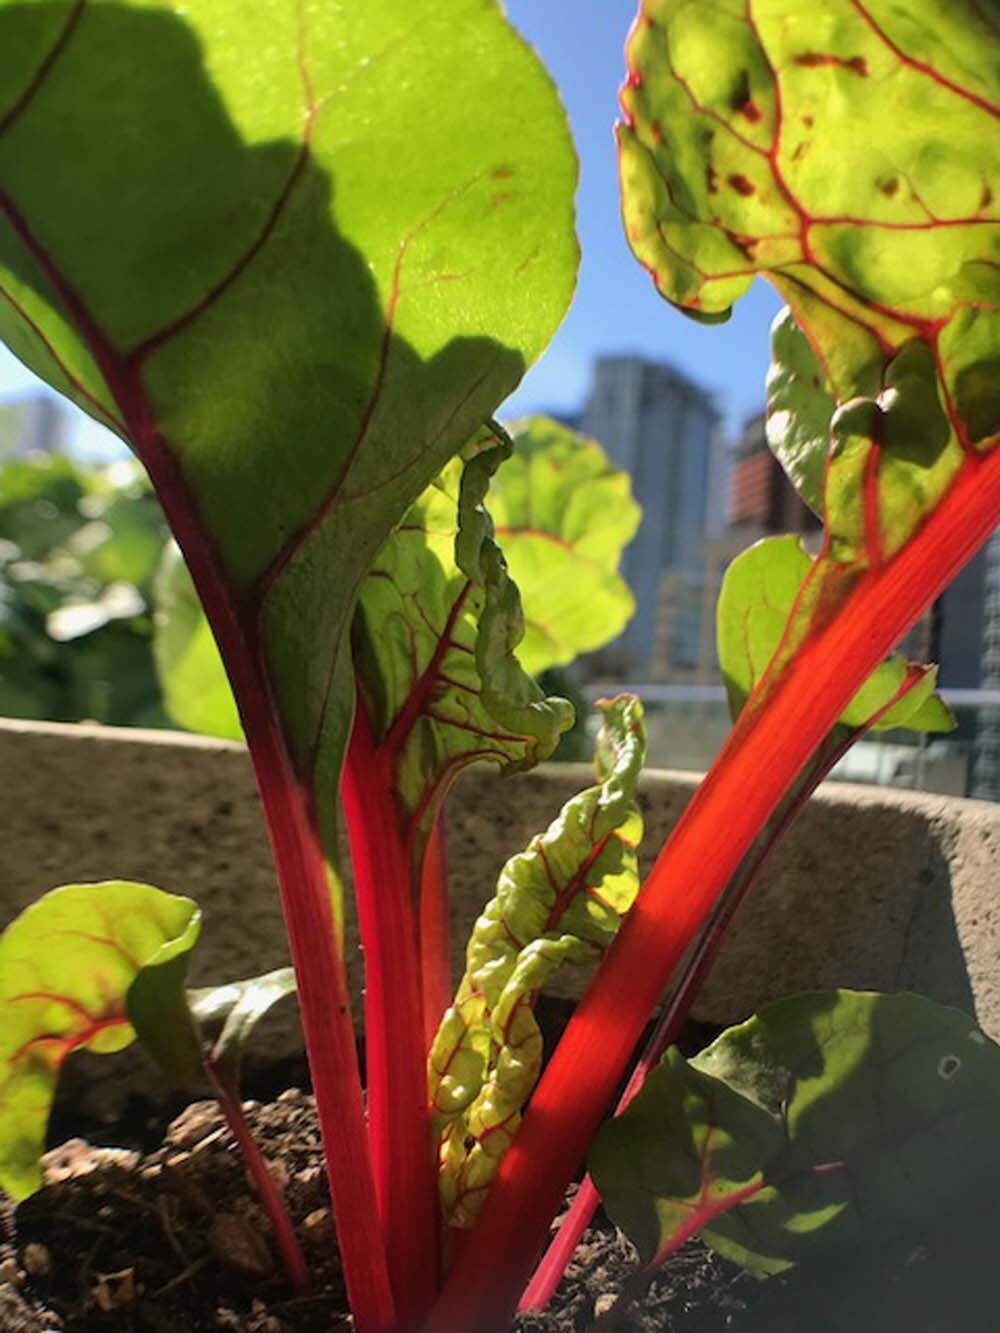 Amazon's rooftop organic vegetable garden, providing the harvest to FareStart restaurant